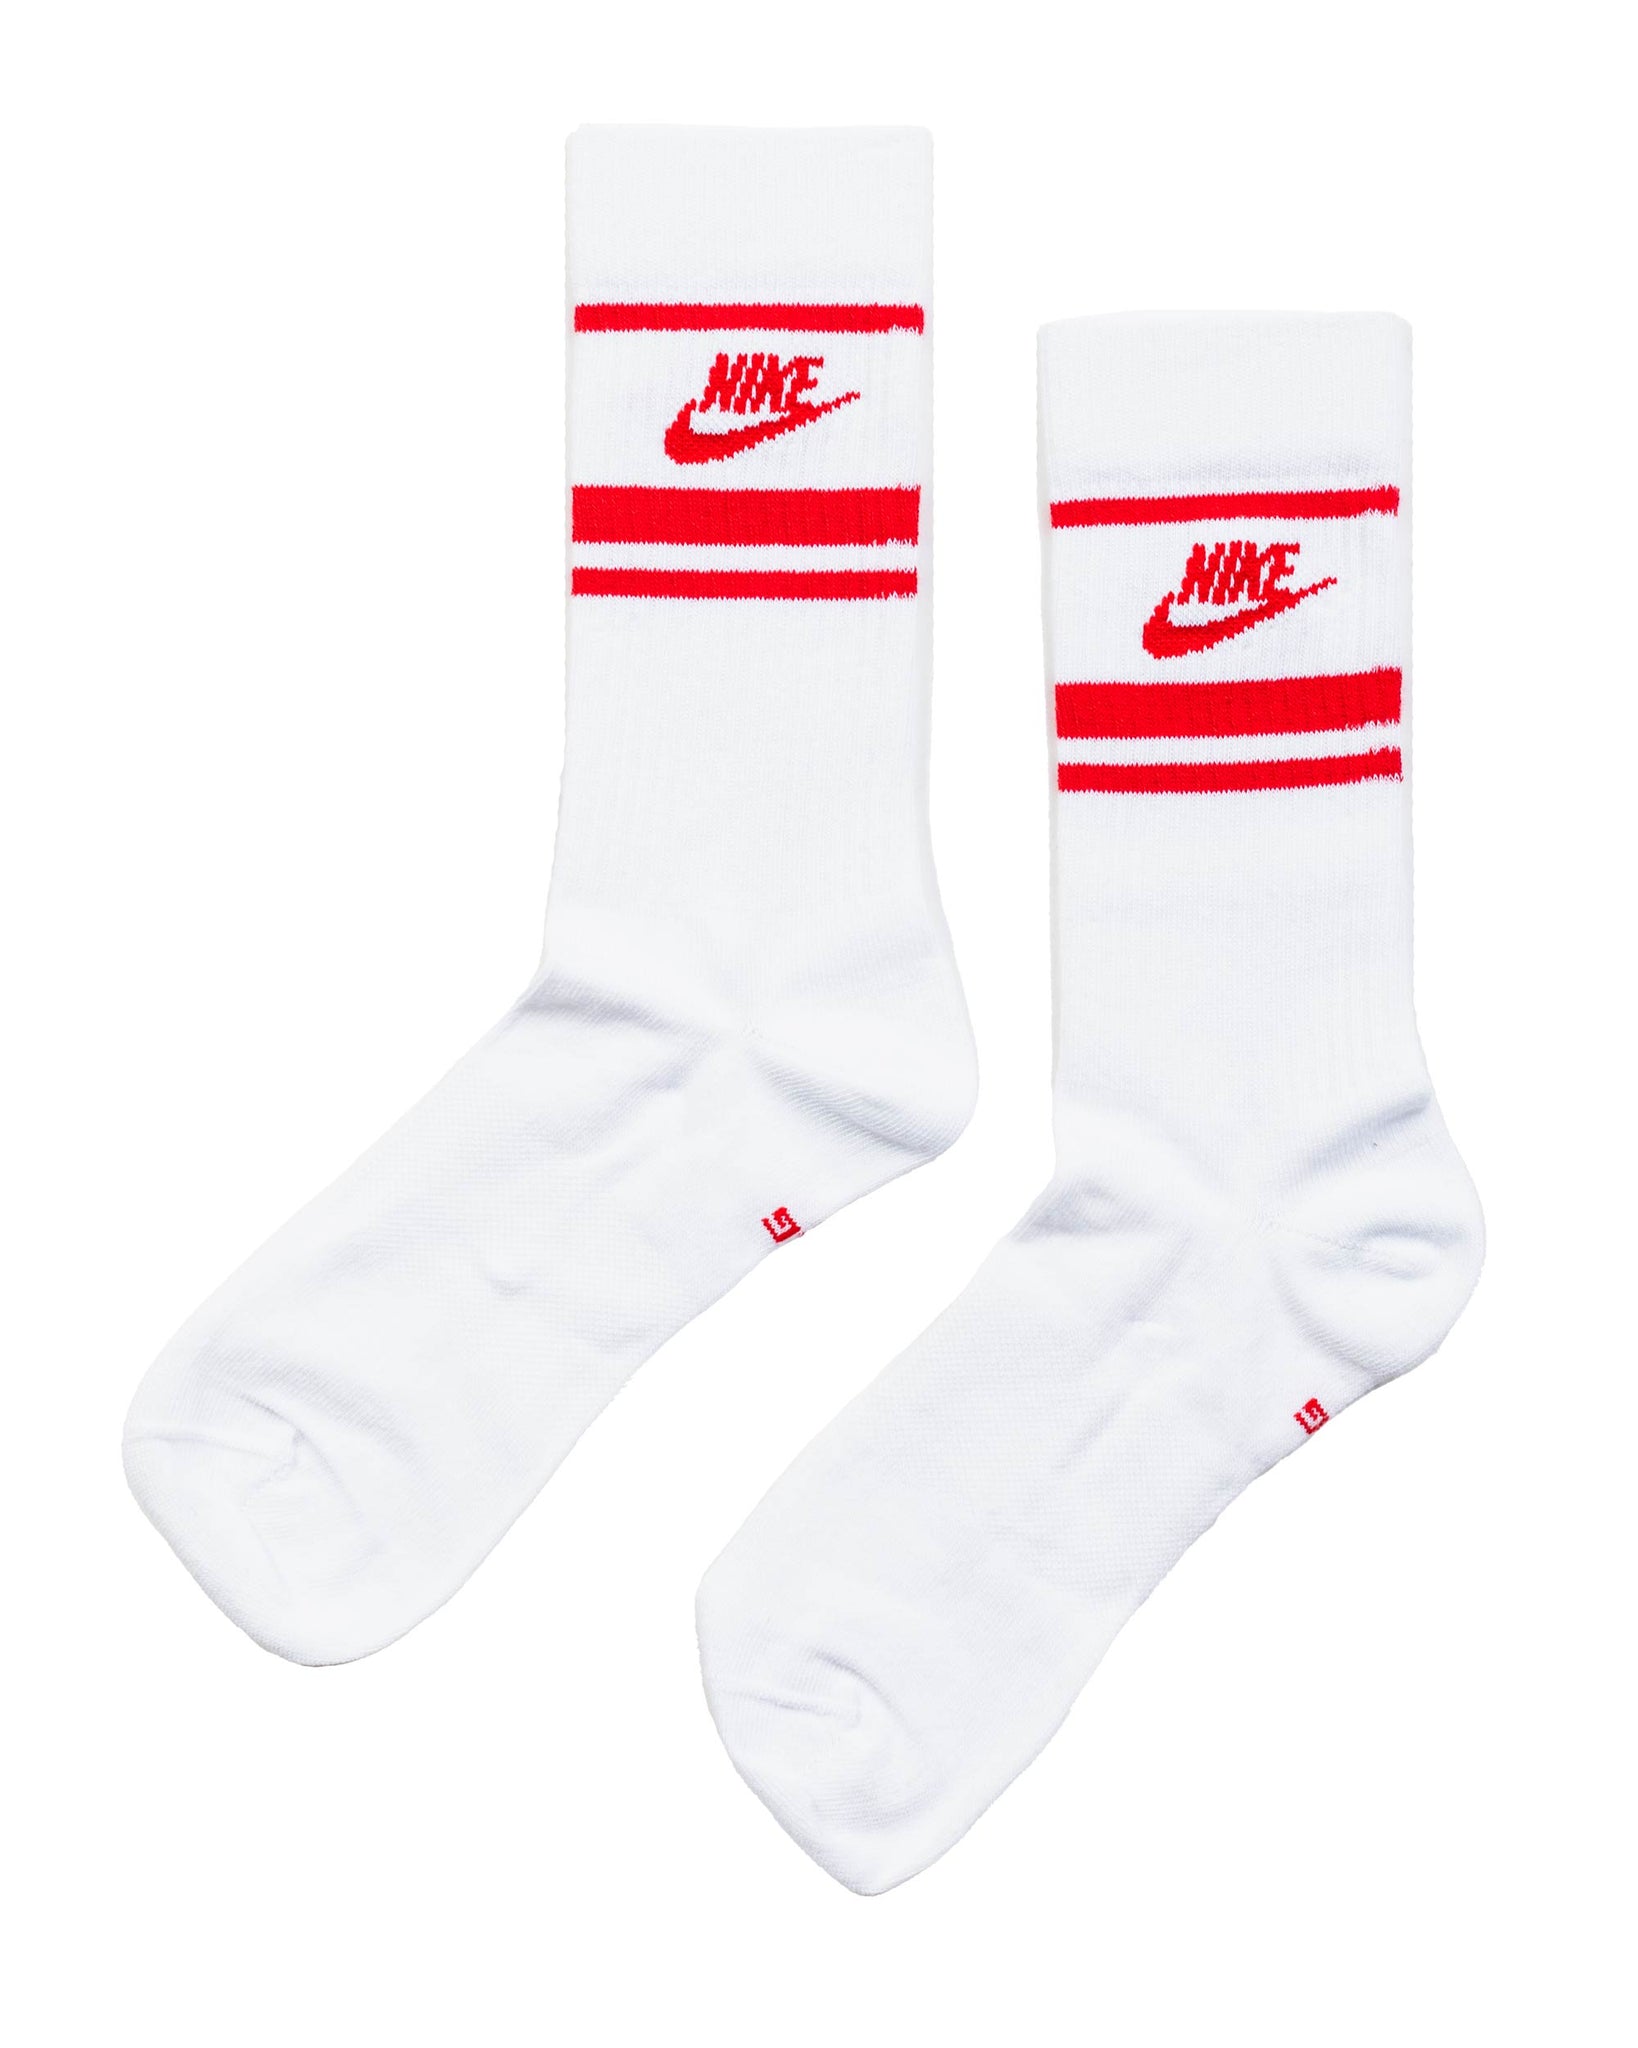 overhemd Socialistisch Uitbeelding Nike Sportswear Everyday Essential Crew Socks White/University Red (3